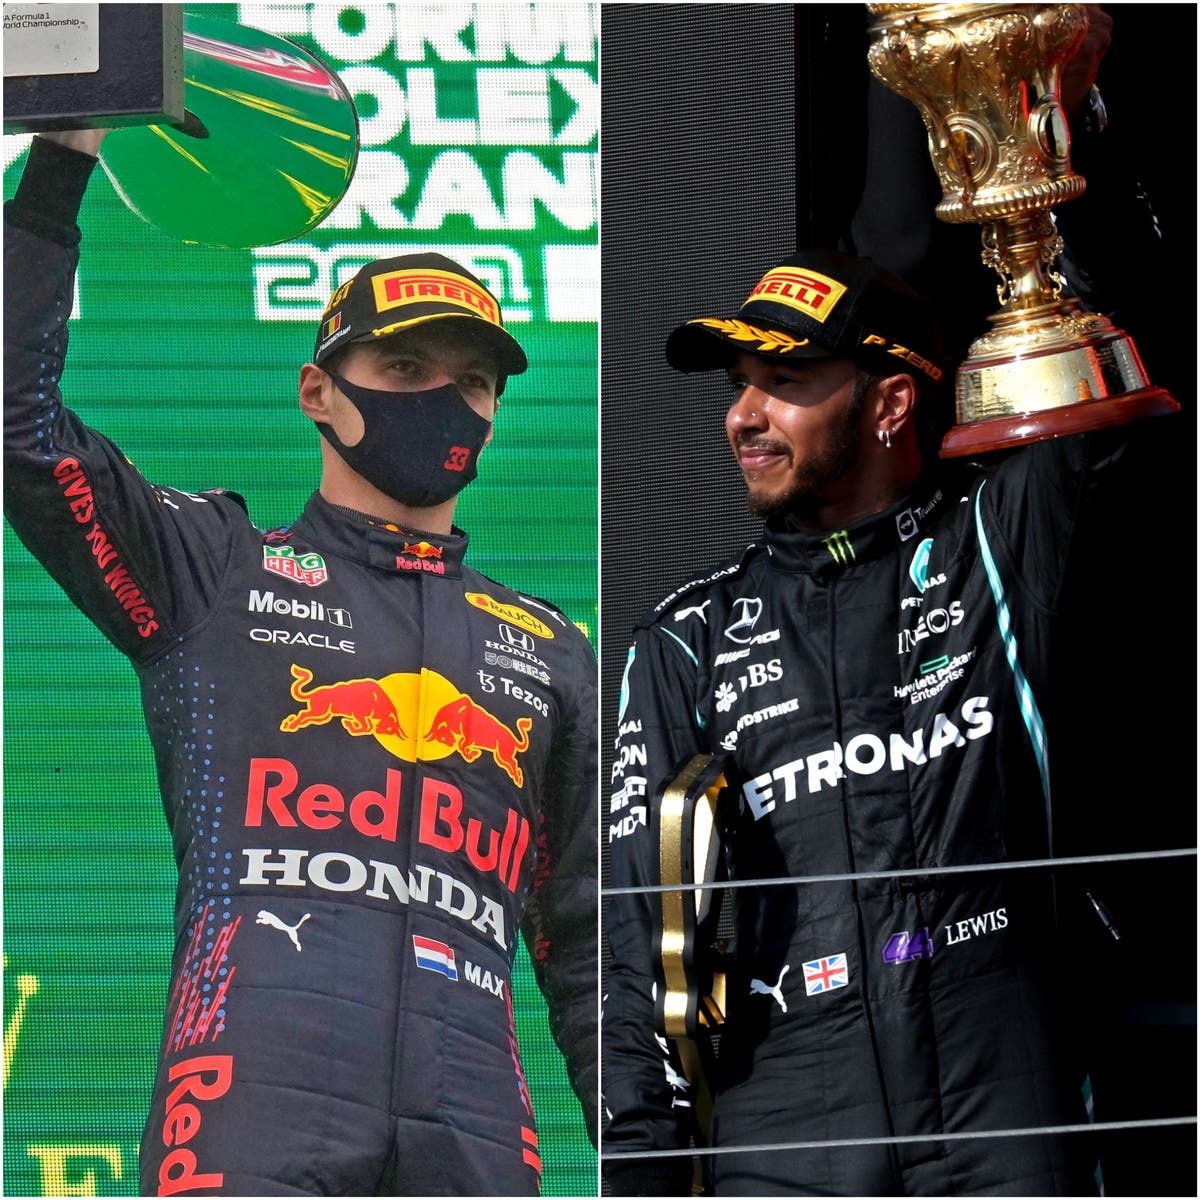 Lewis Hamilton mot Max Verstappen – Tale of the tape